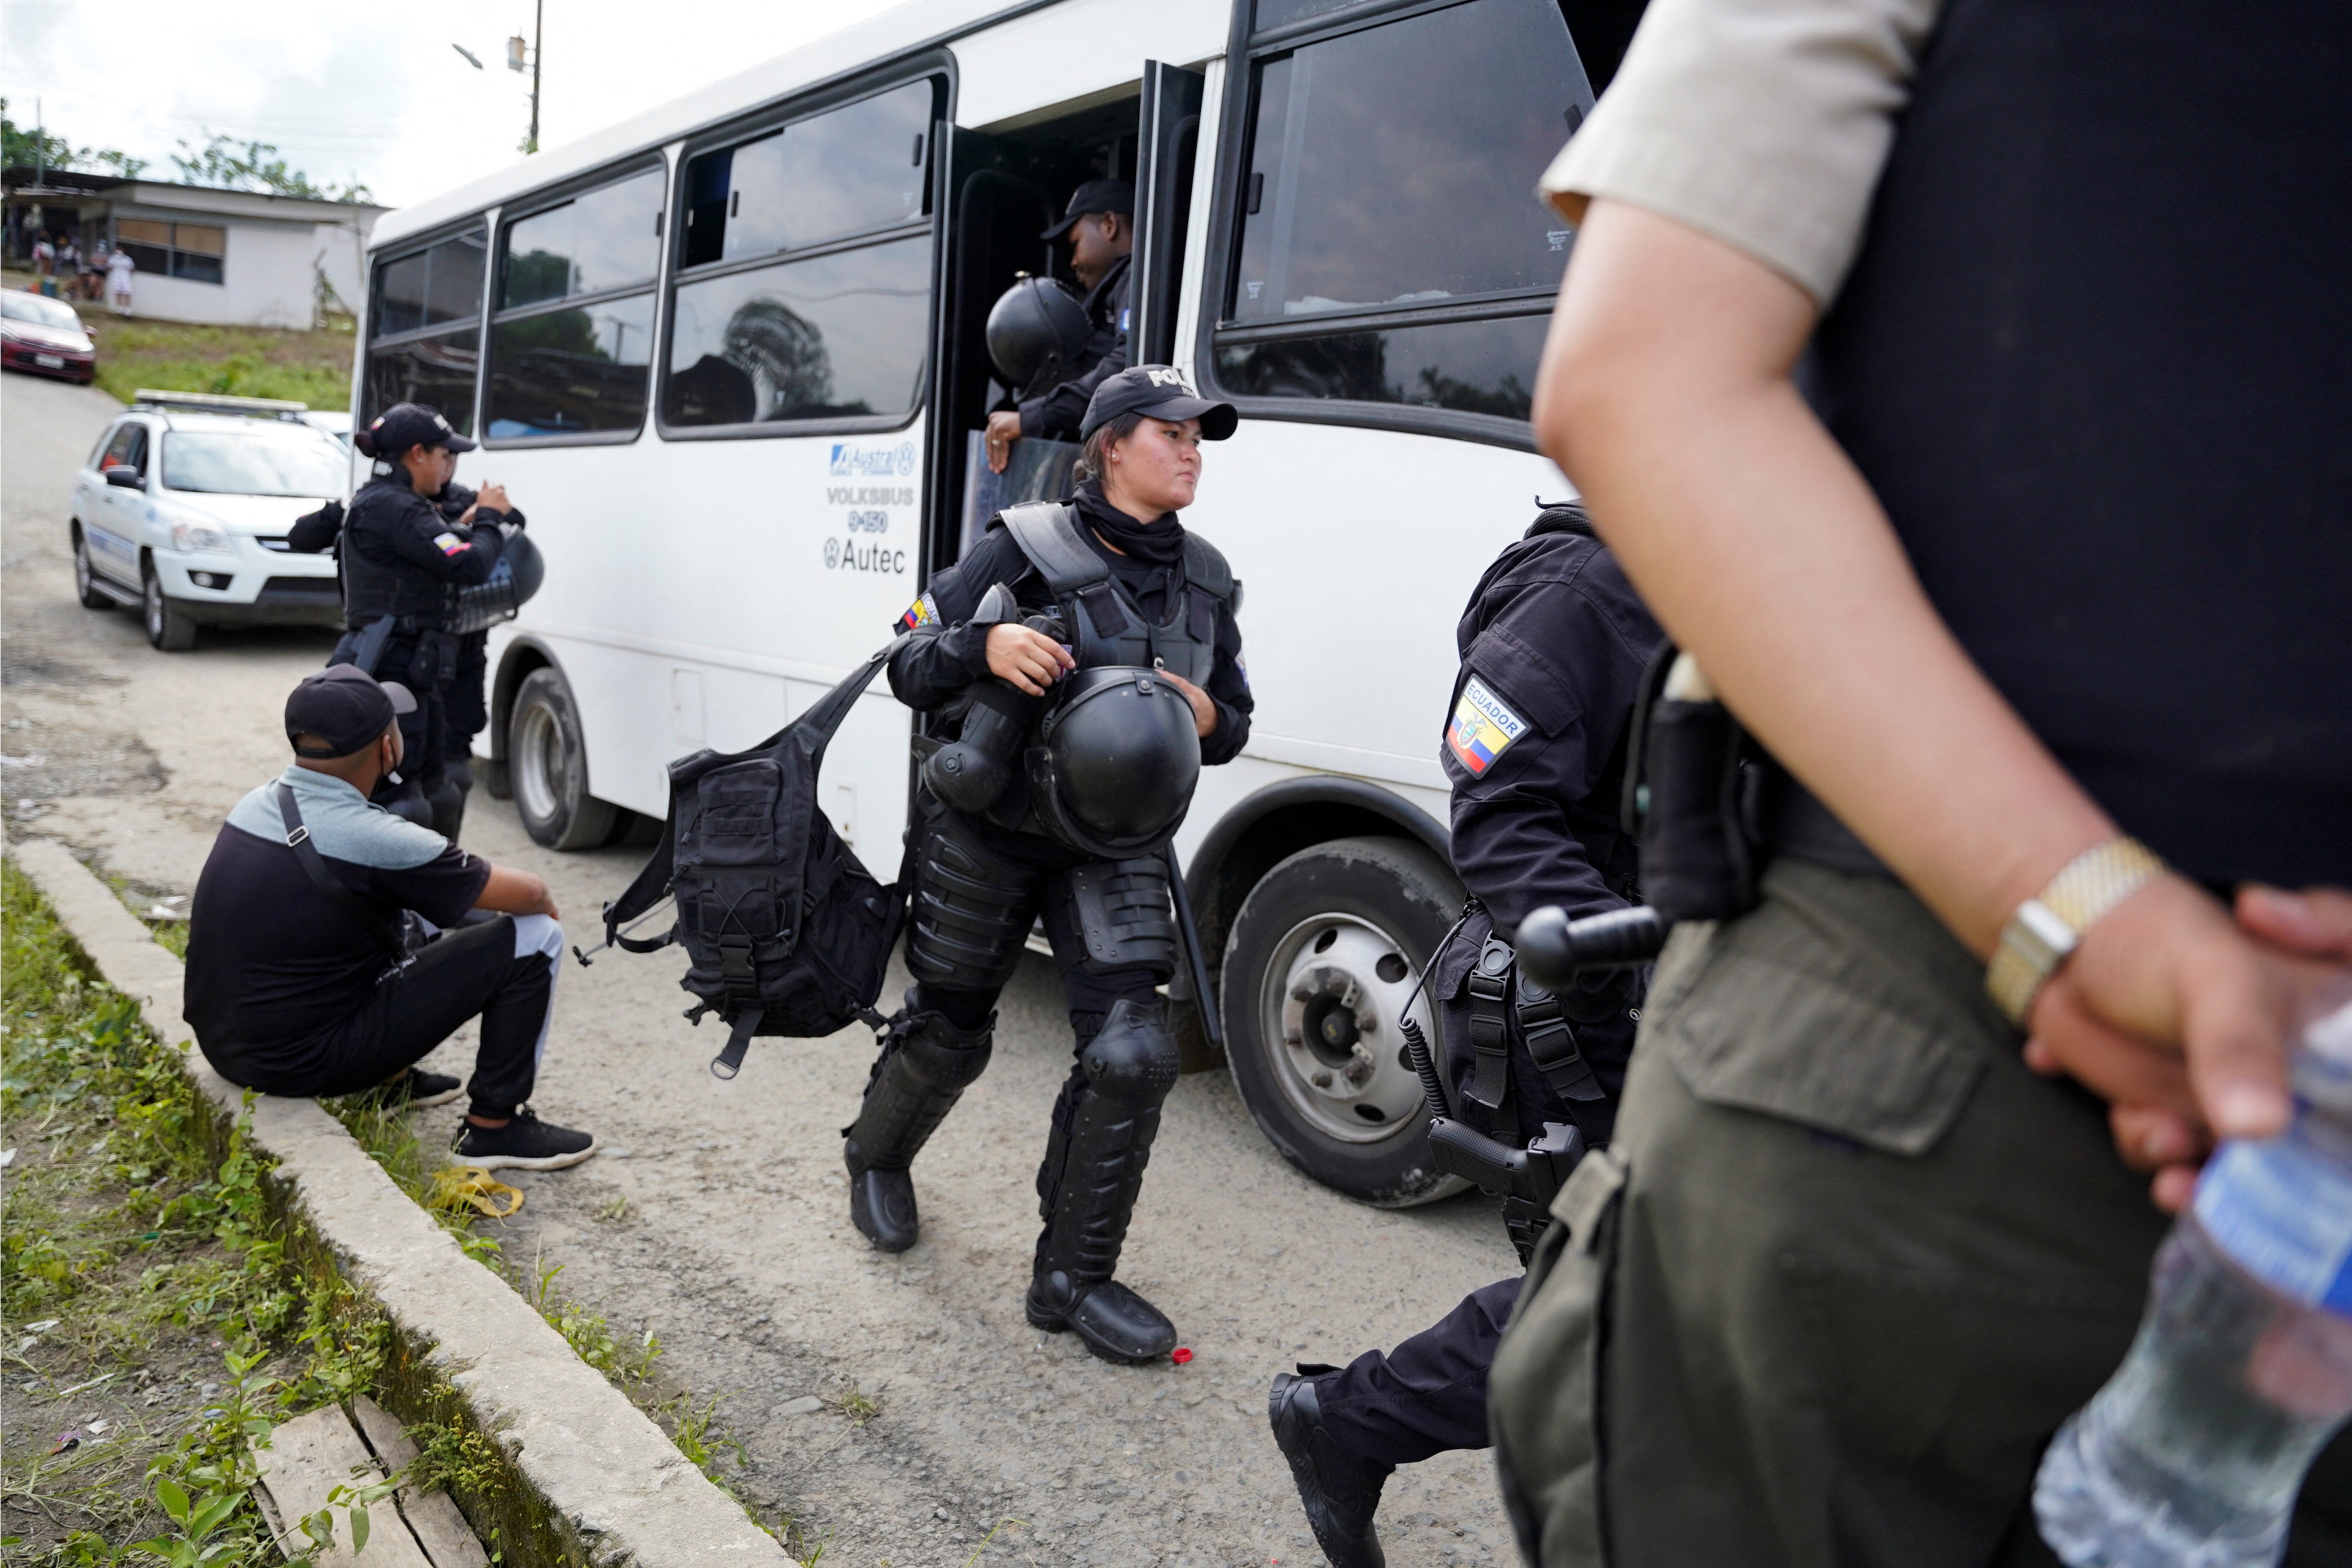 Authorities in Ecuador recapture escaped inmates after prison riot